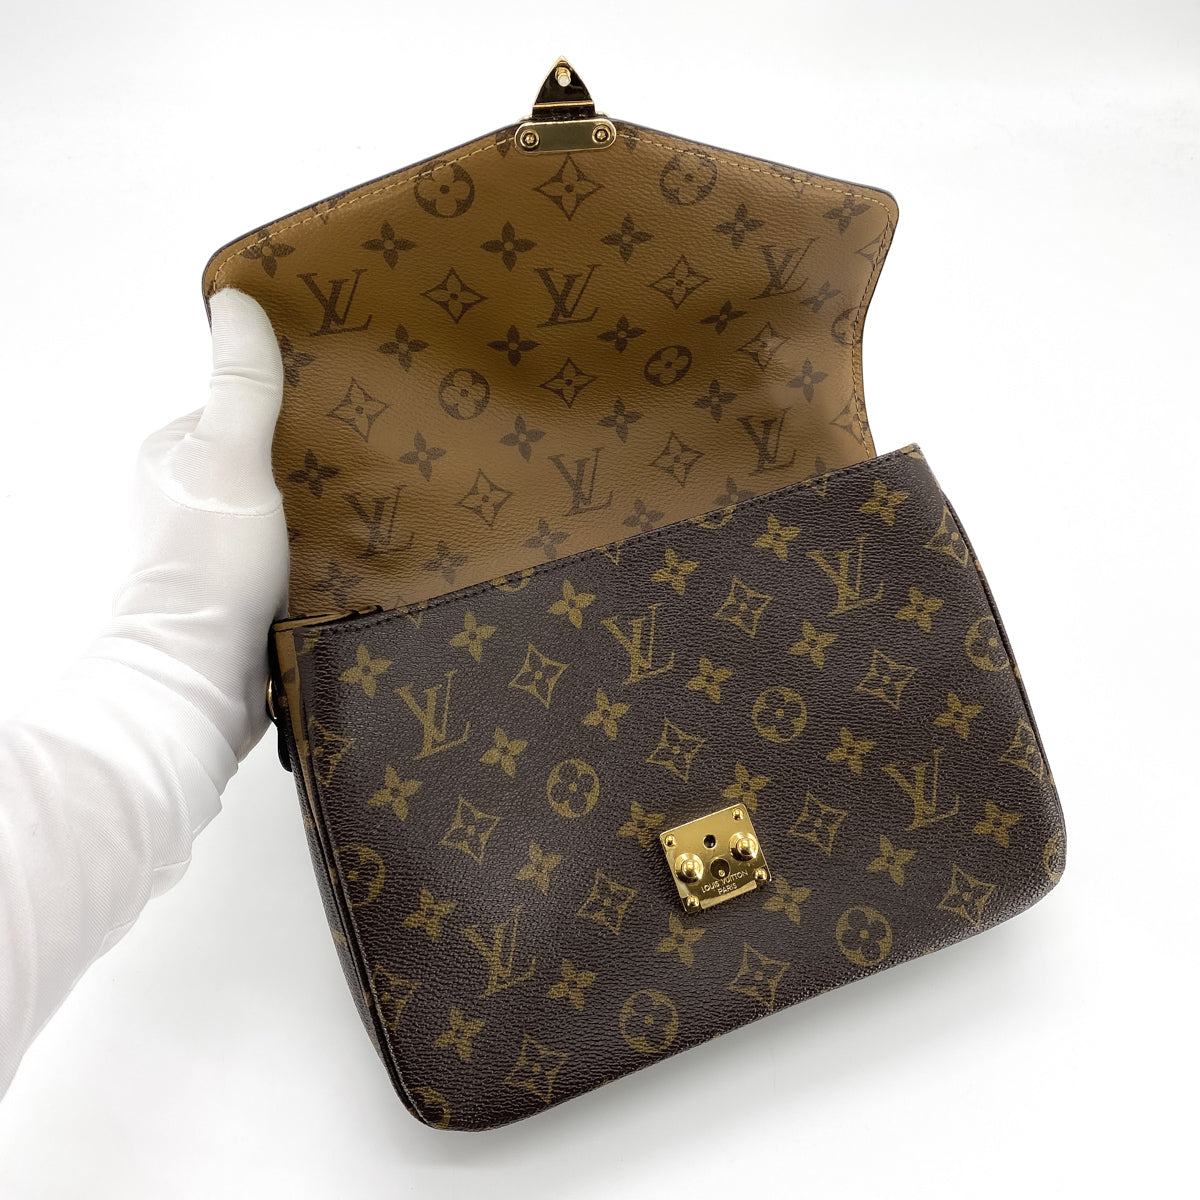 First Impression LV Pochette Metis Reverse Monogram #luxury #bag